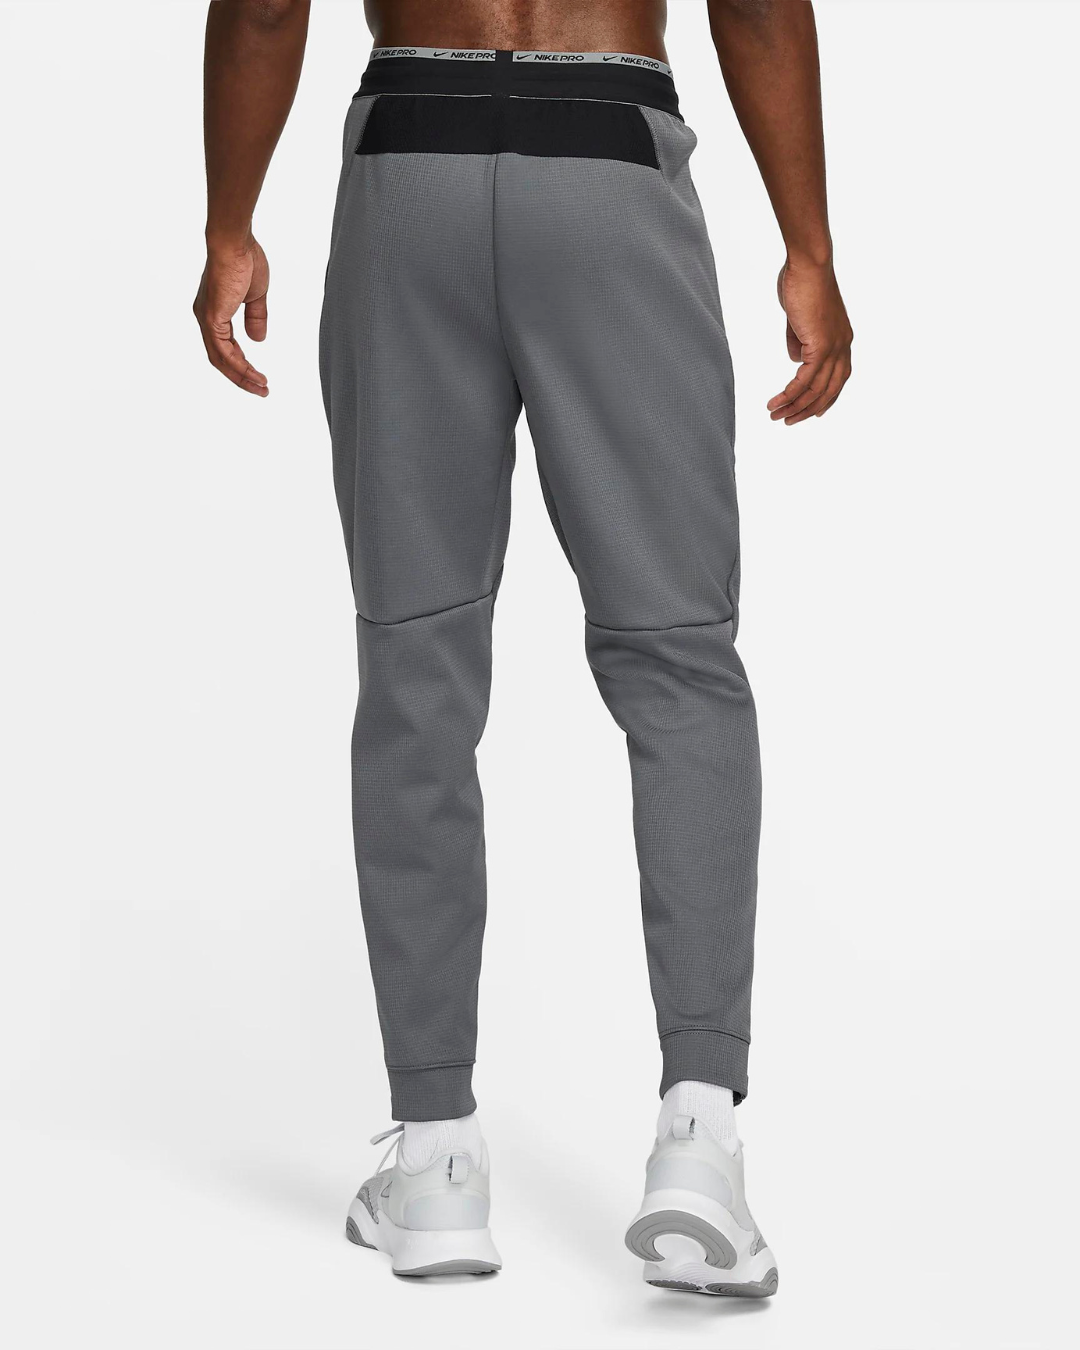 Pantalon Nike Therma Sphere - Gris